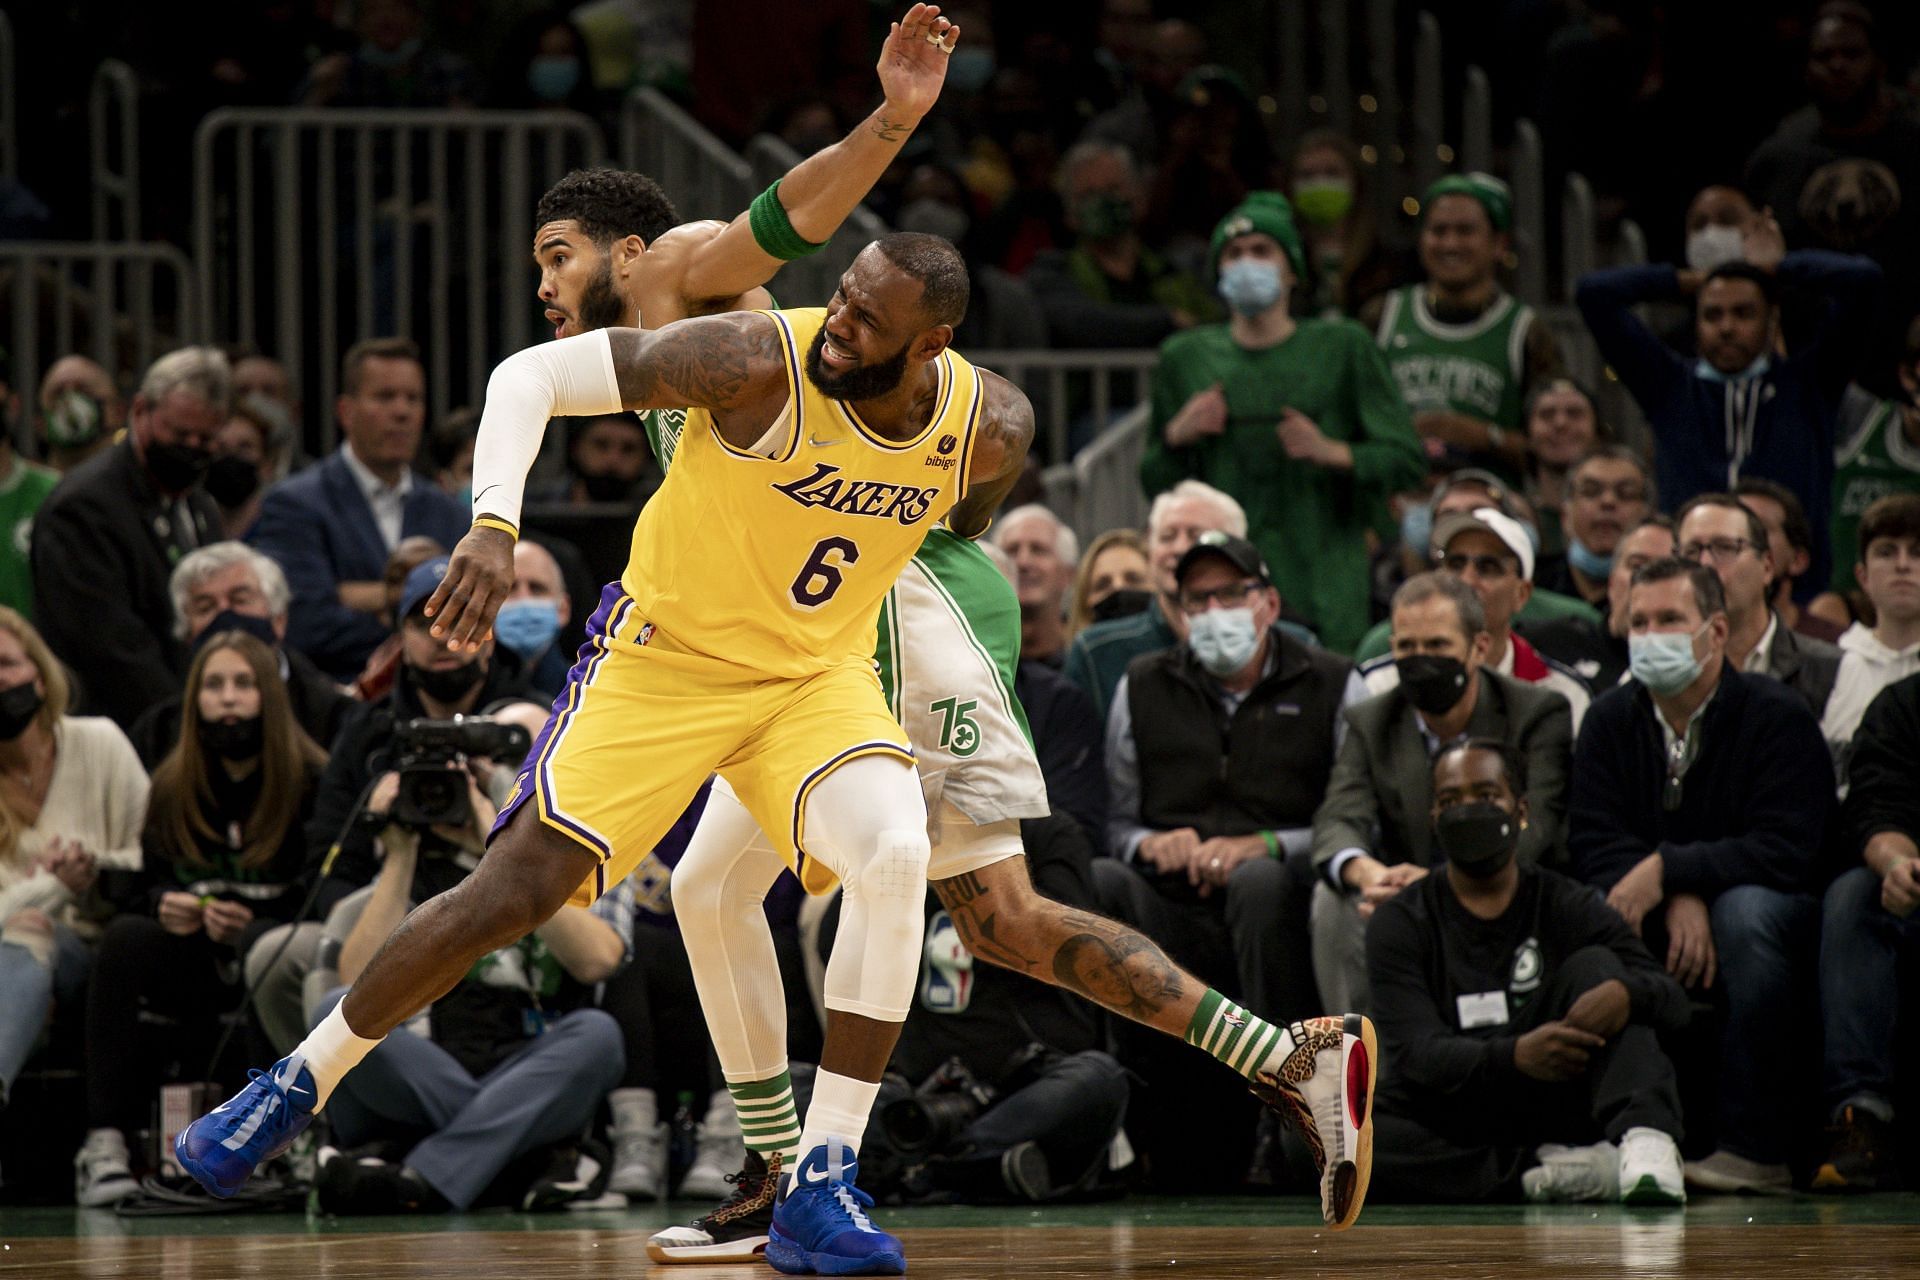 LA Lakers will play the Boston Celtics on Tuesday